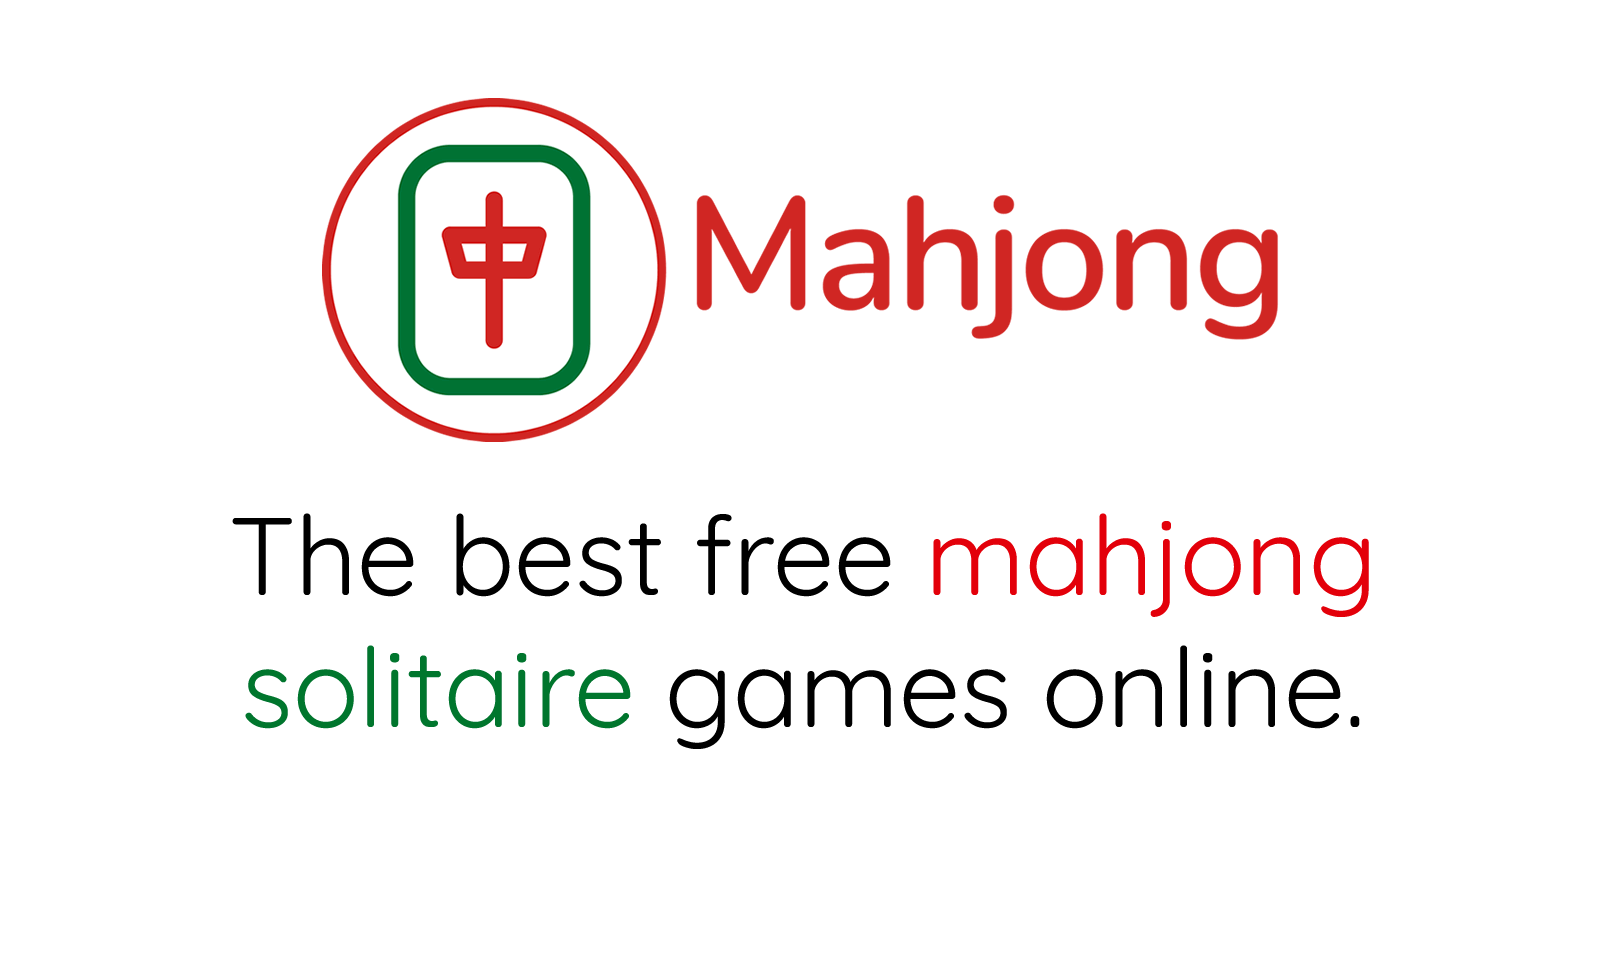 Mahjong Connect 4 spelletjes